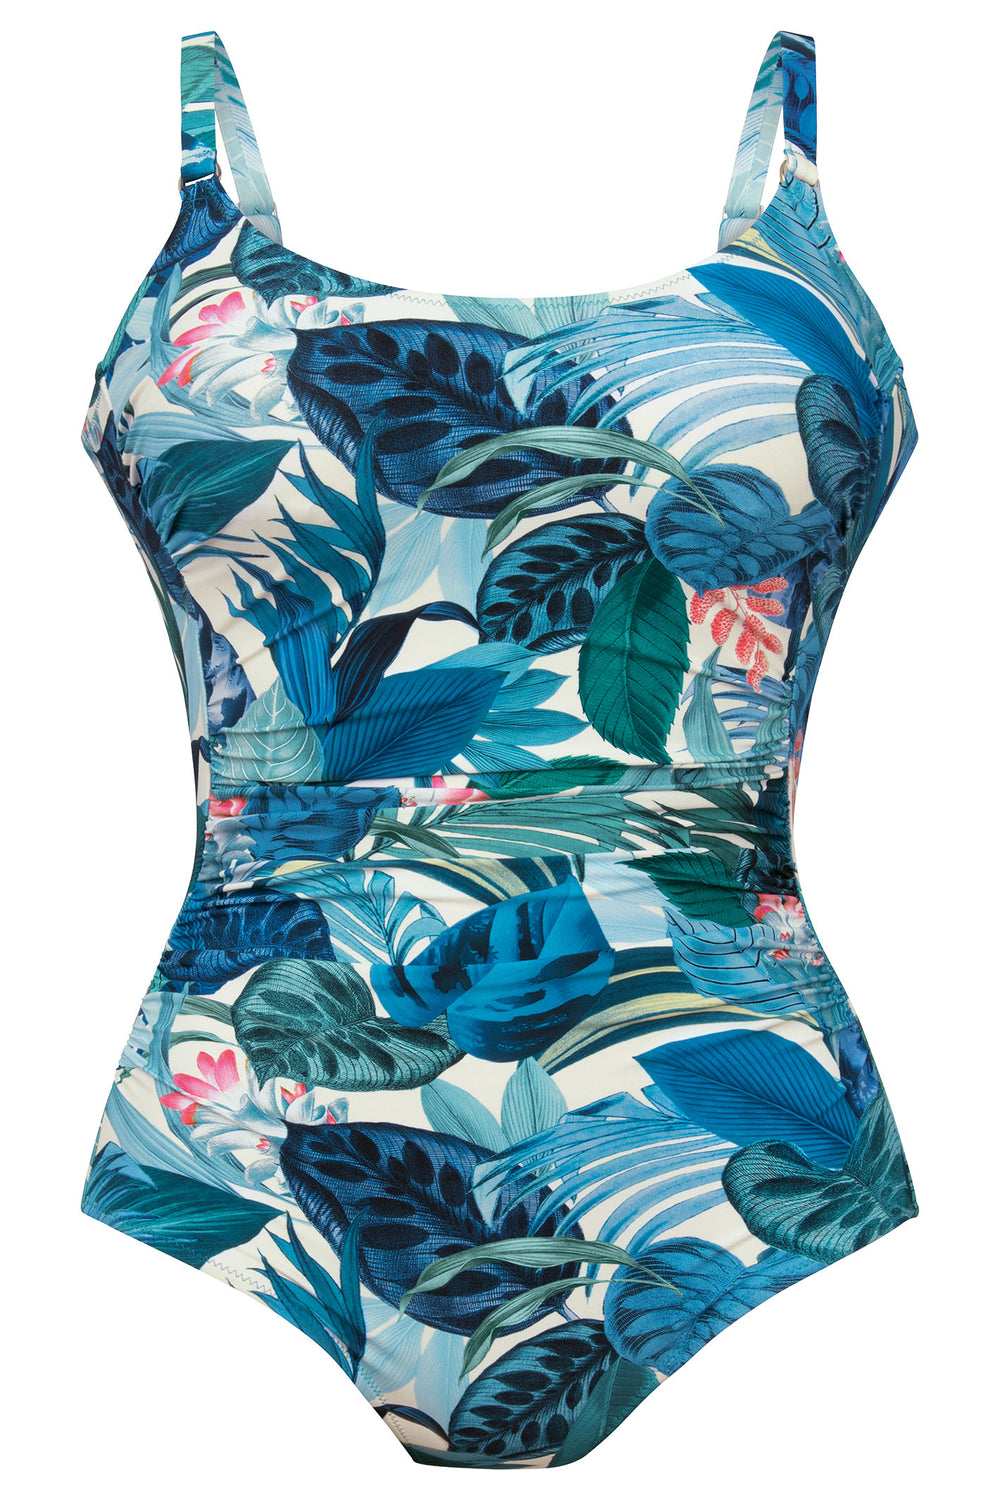 Anita Care 7201 336 Curacao Blue Tropical Print Swimsuit - Shirley Allum Boutique